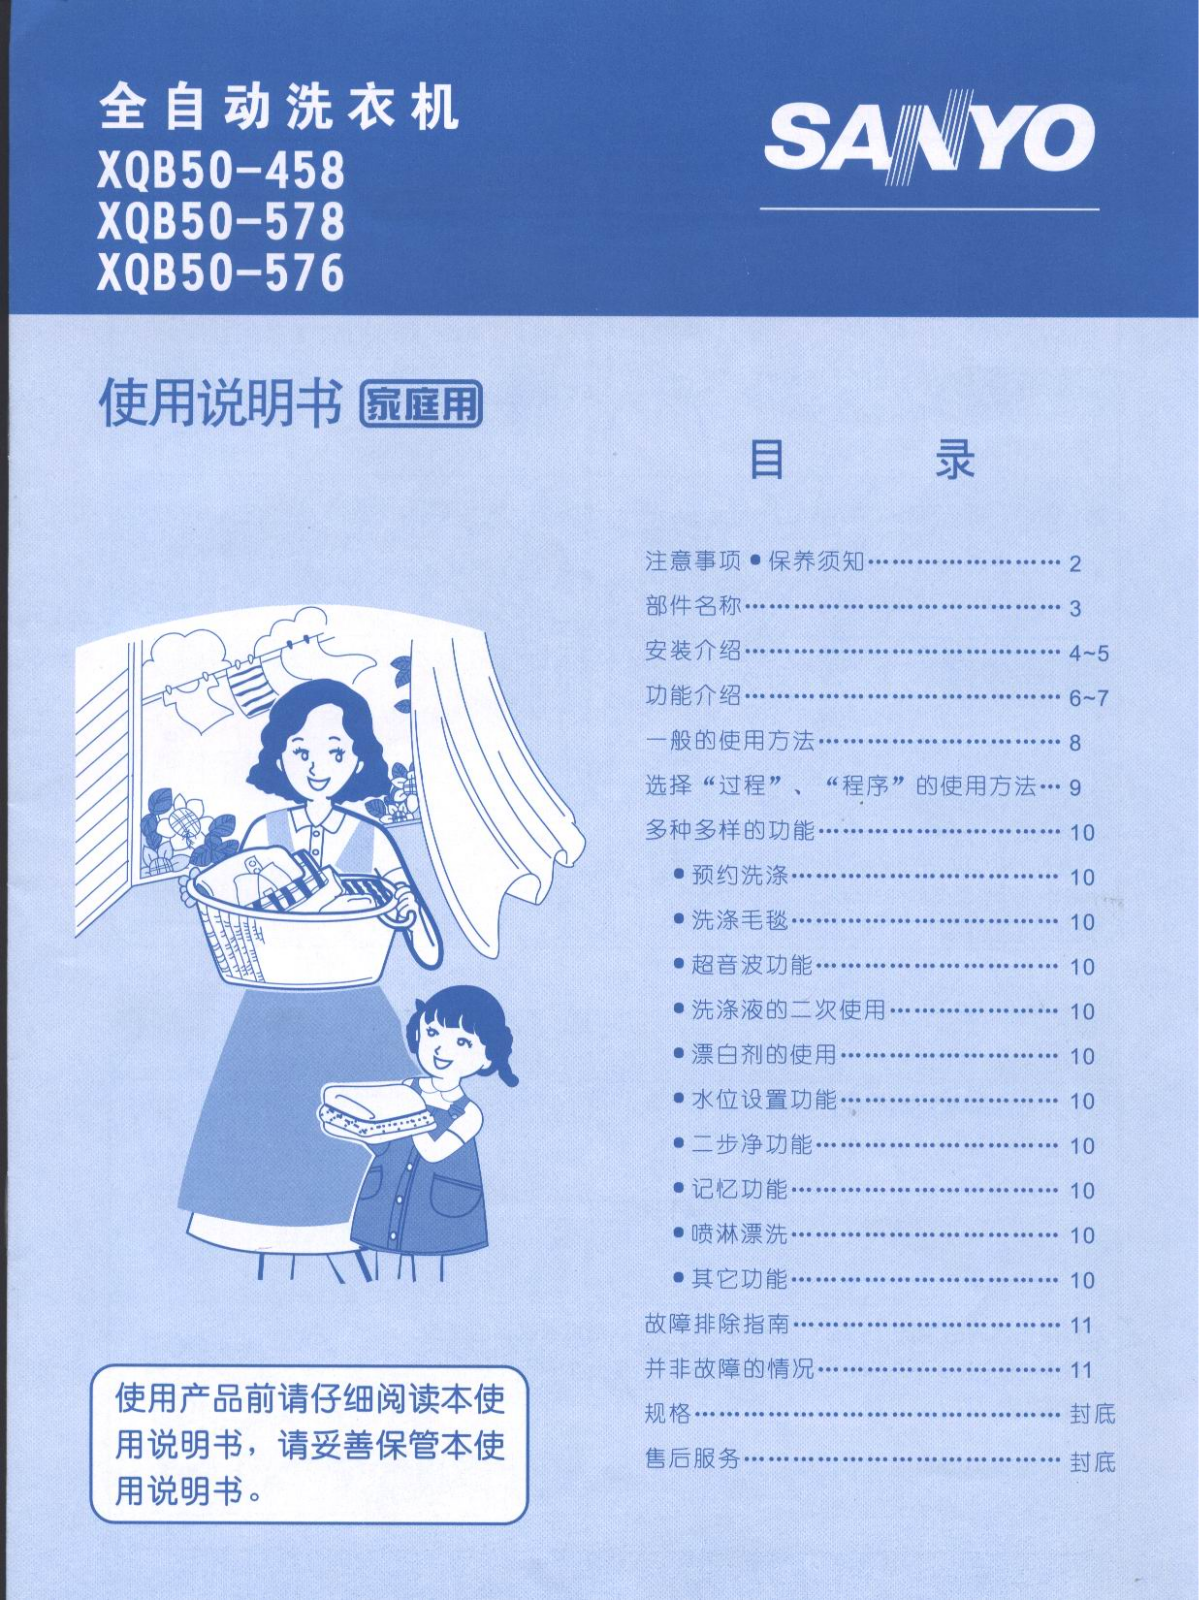 SANYO XQB50-458, XQB50-578, XQB50-576 User Manual